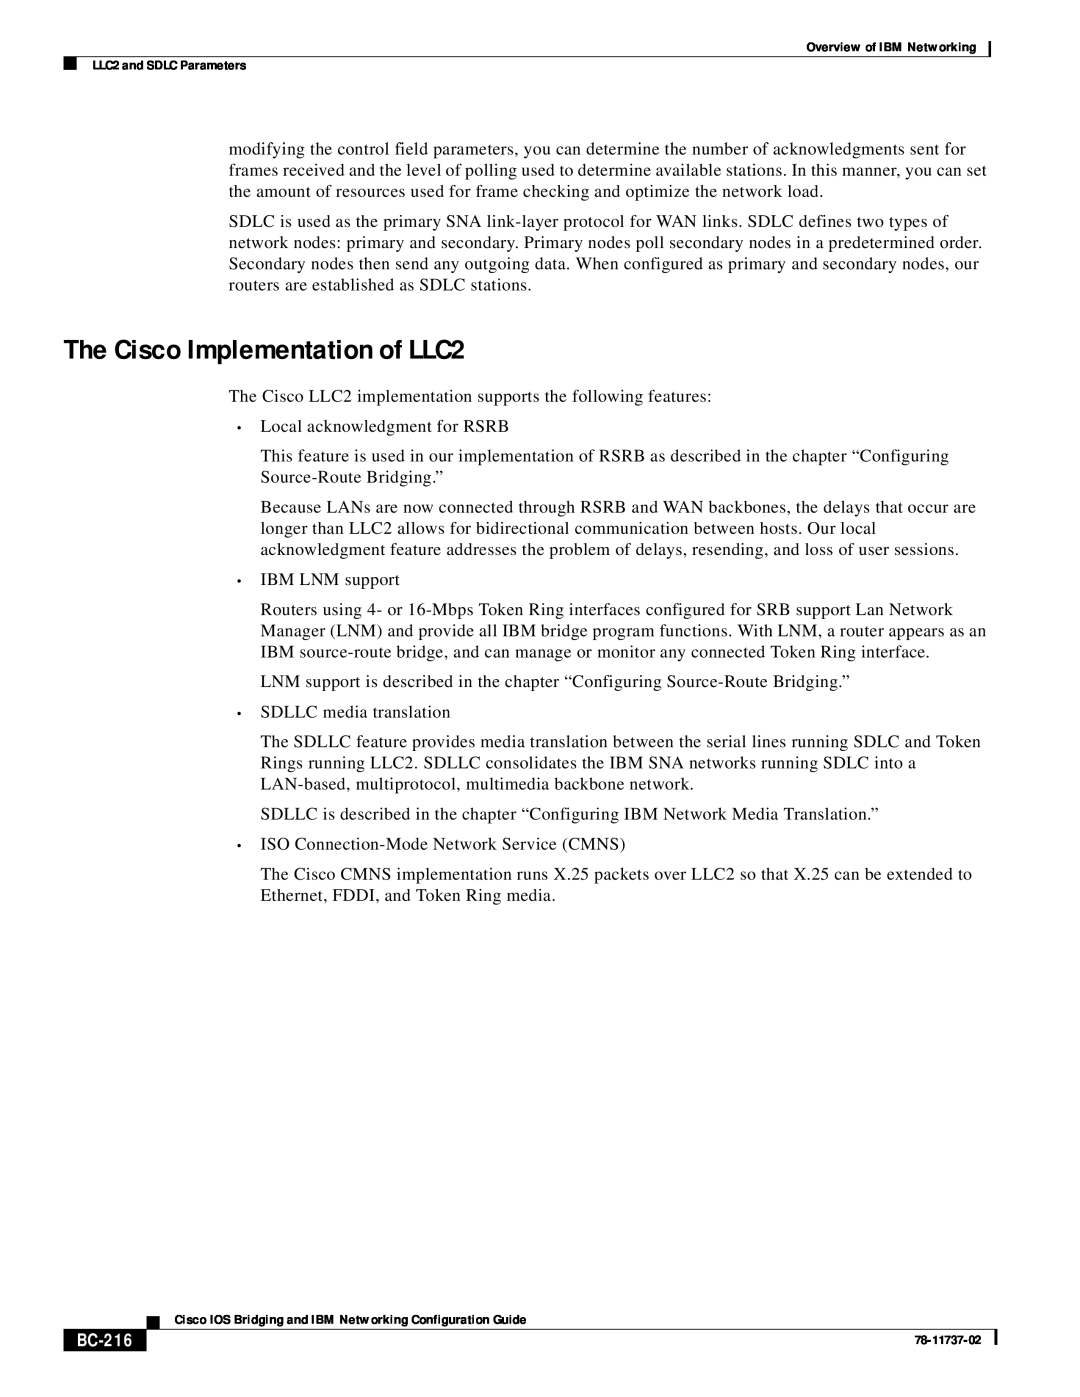 IBM BC-201 manual The Cisco Implementation of LLC2, BC-216 